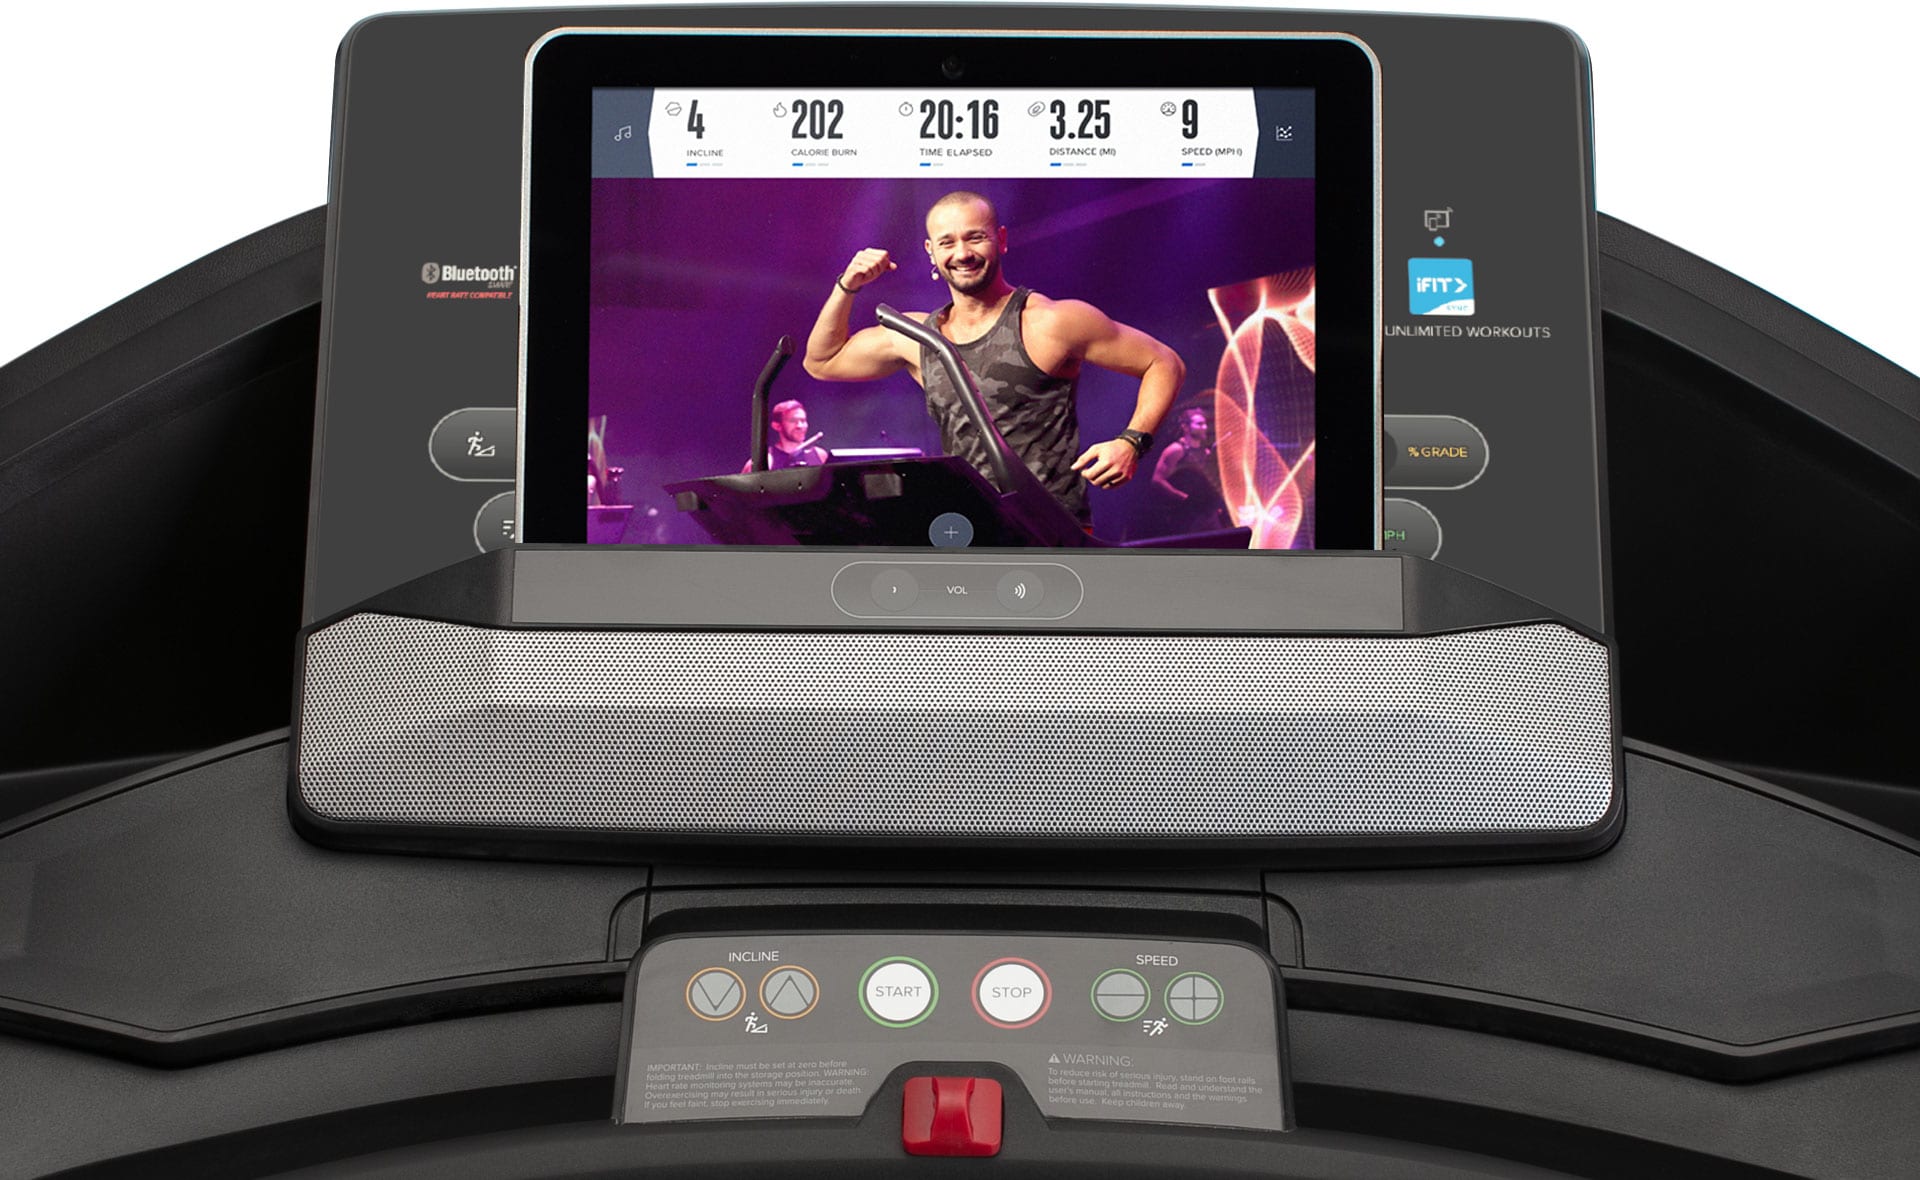 Proform Trainer 8.0 Folding Treadmill -  5” High Contrast Multi-Color Display